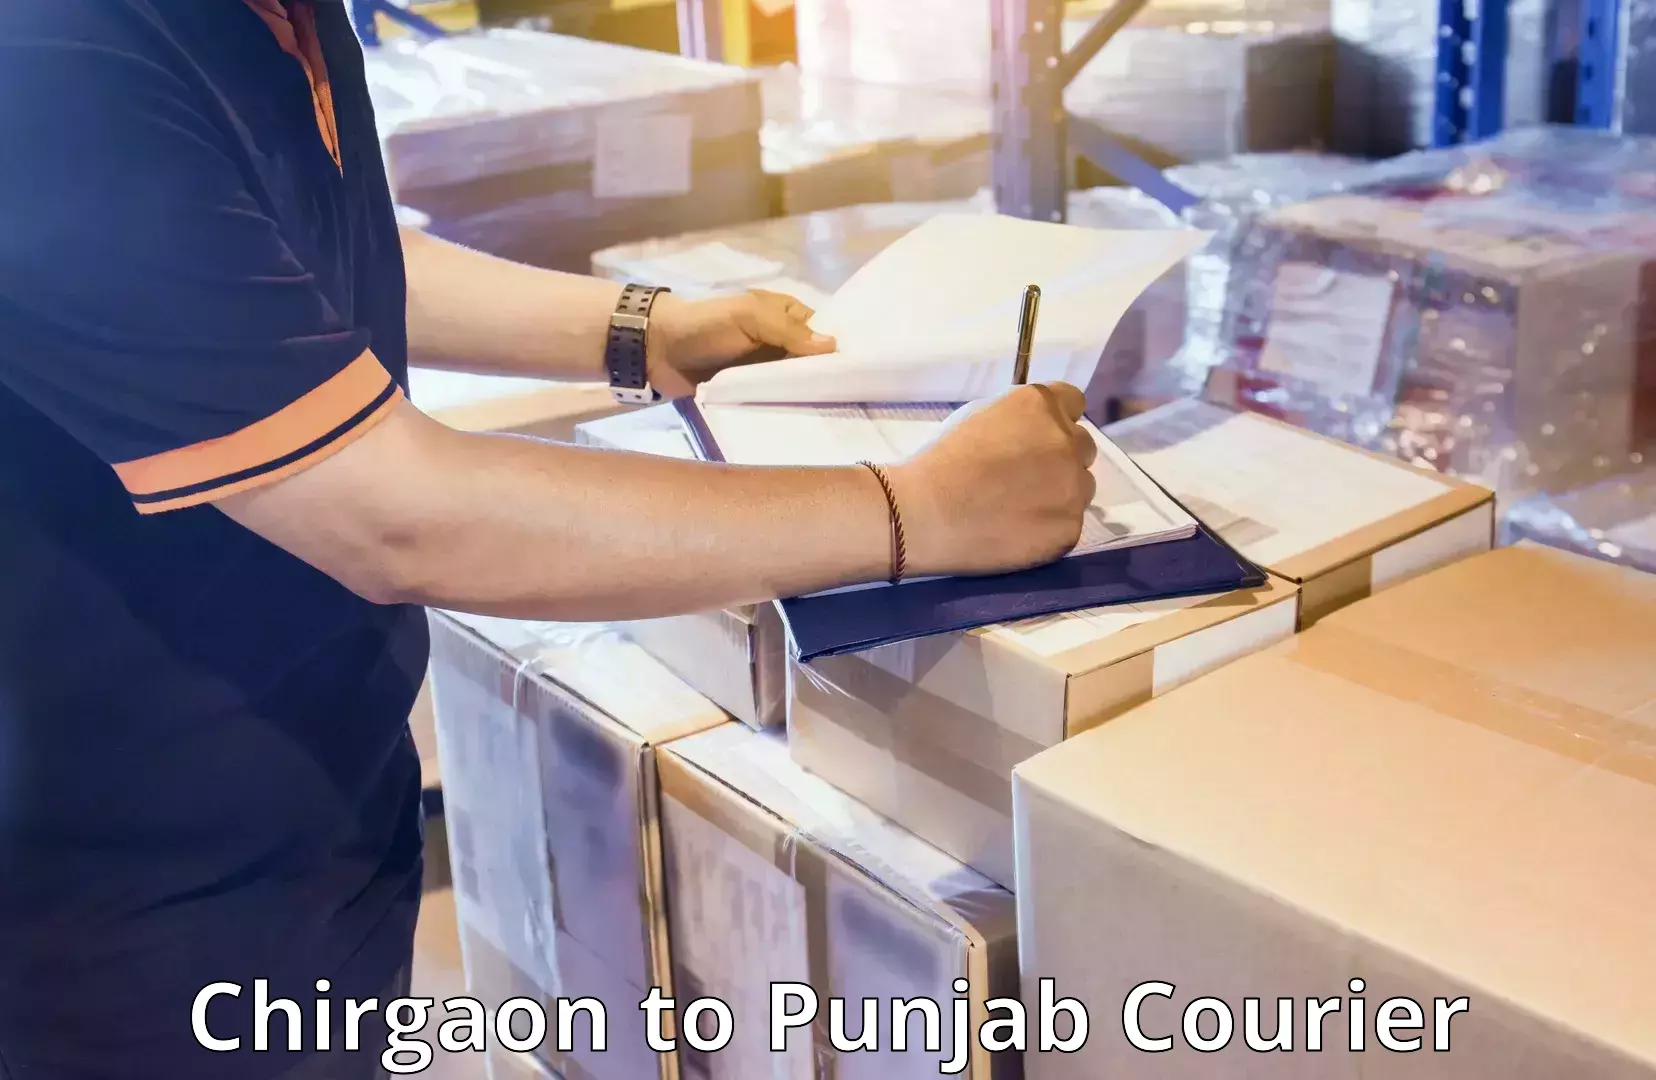 Doorstep luggage collection in Chirgaon to Punjab